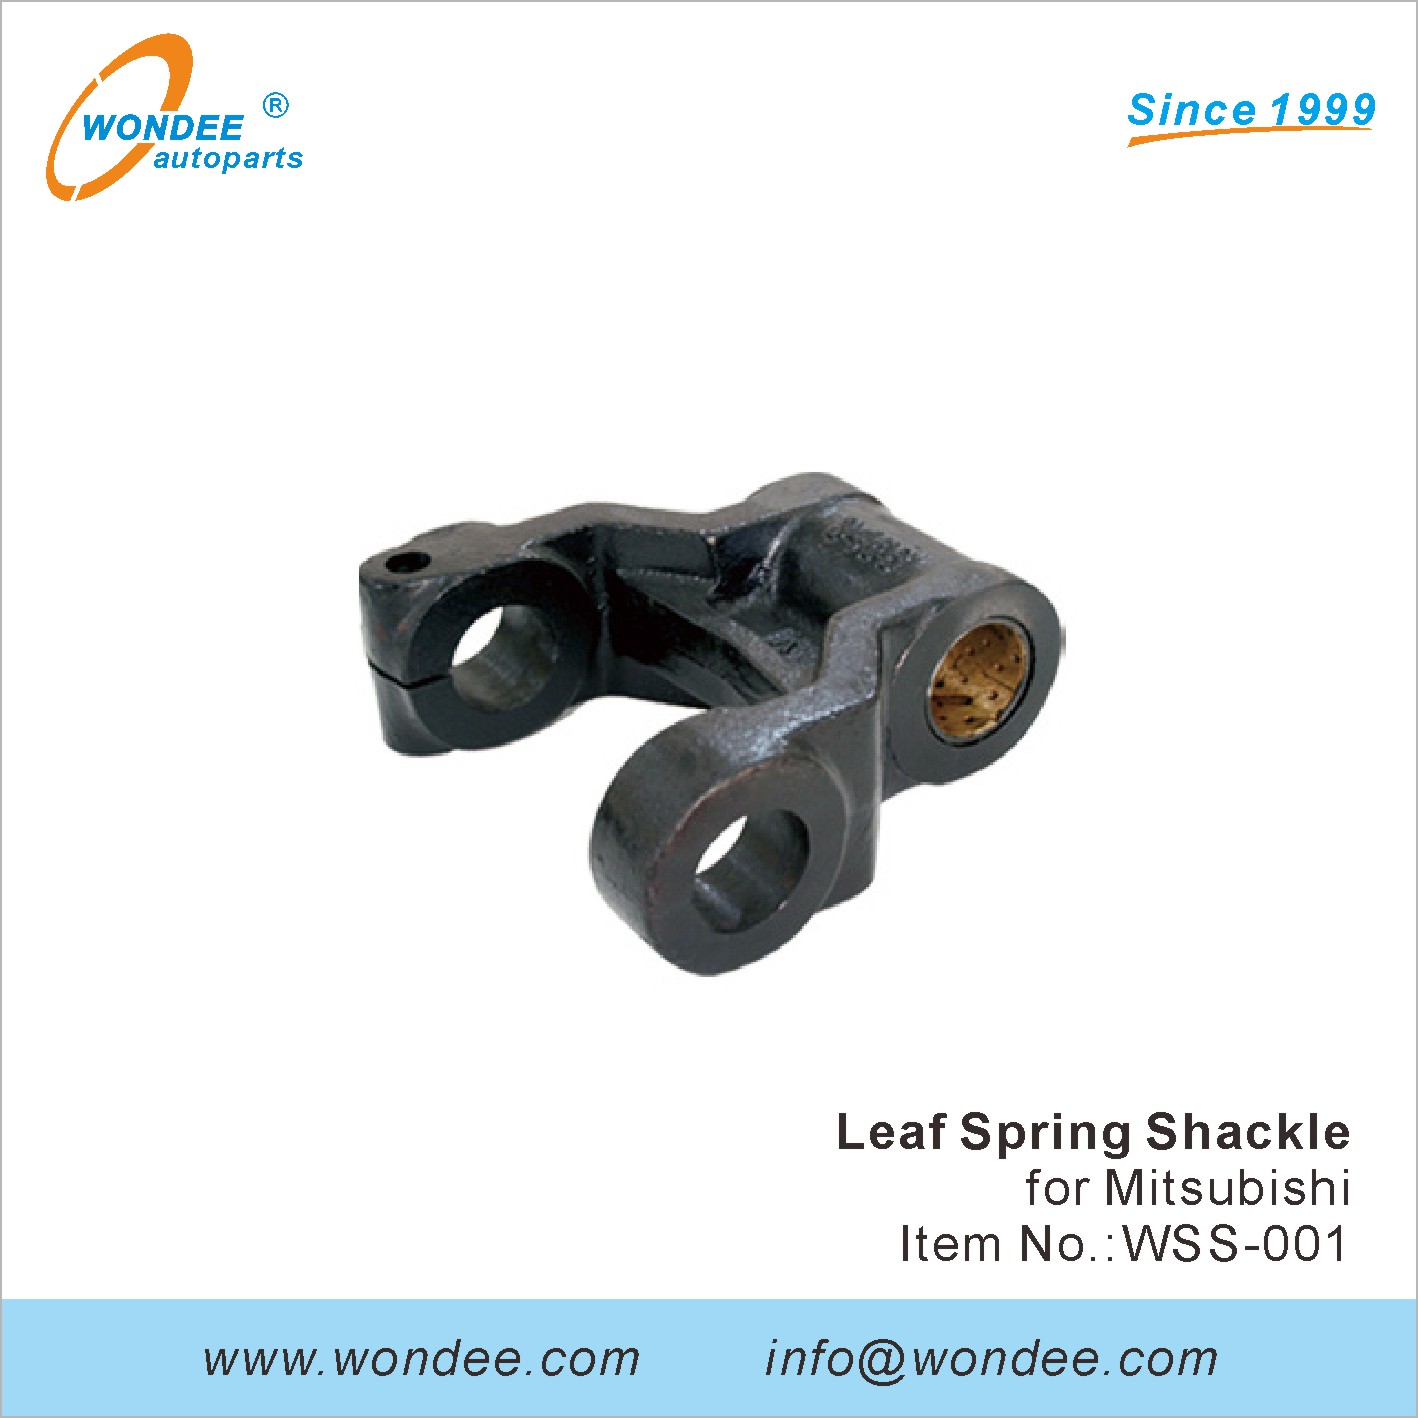 WONDEE leaf spring shackle (1)